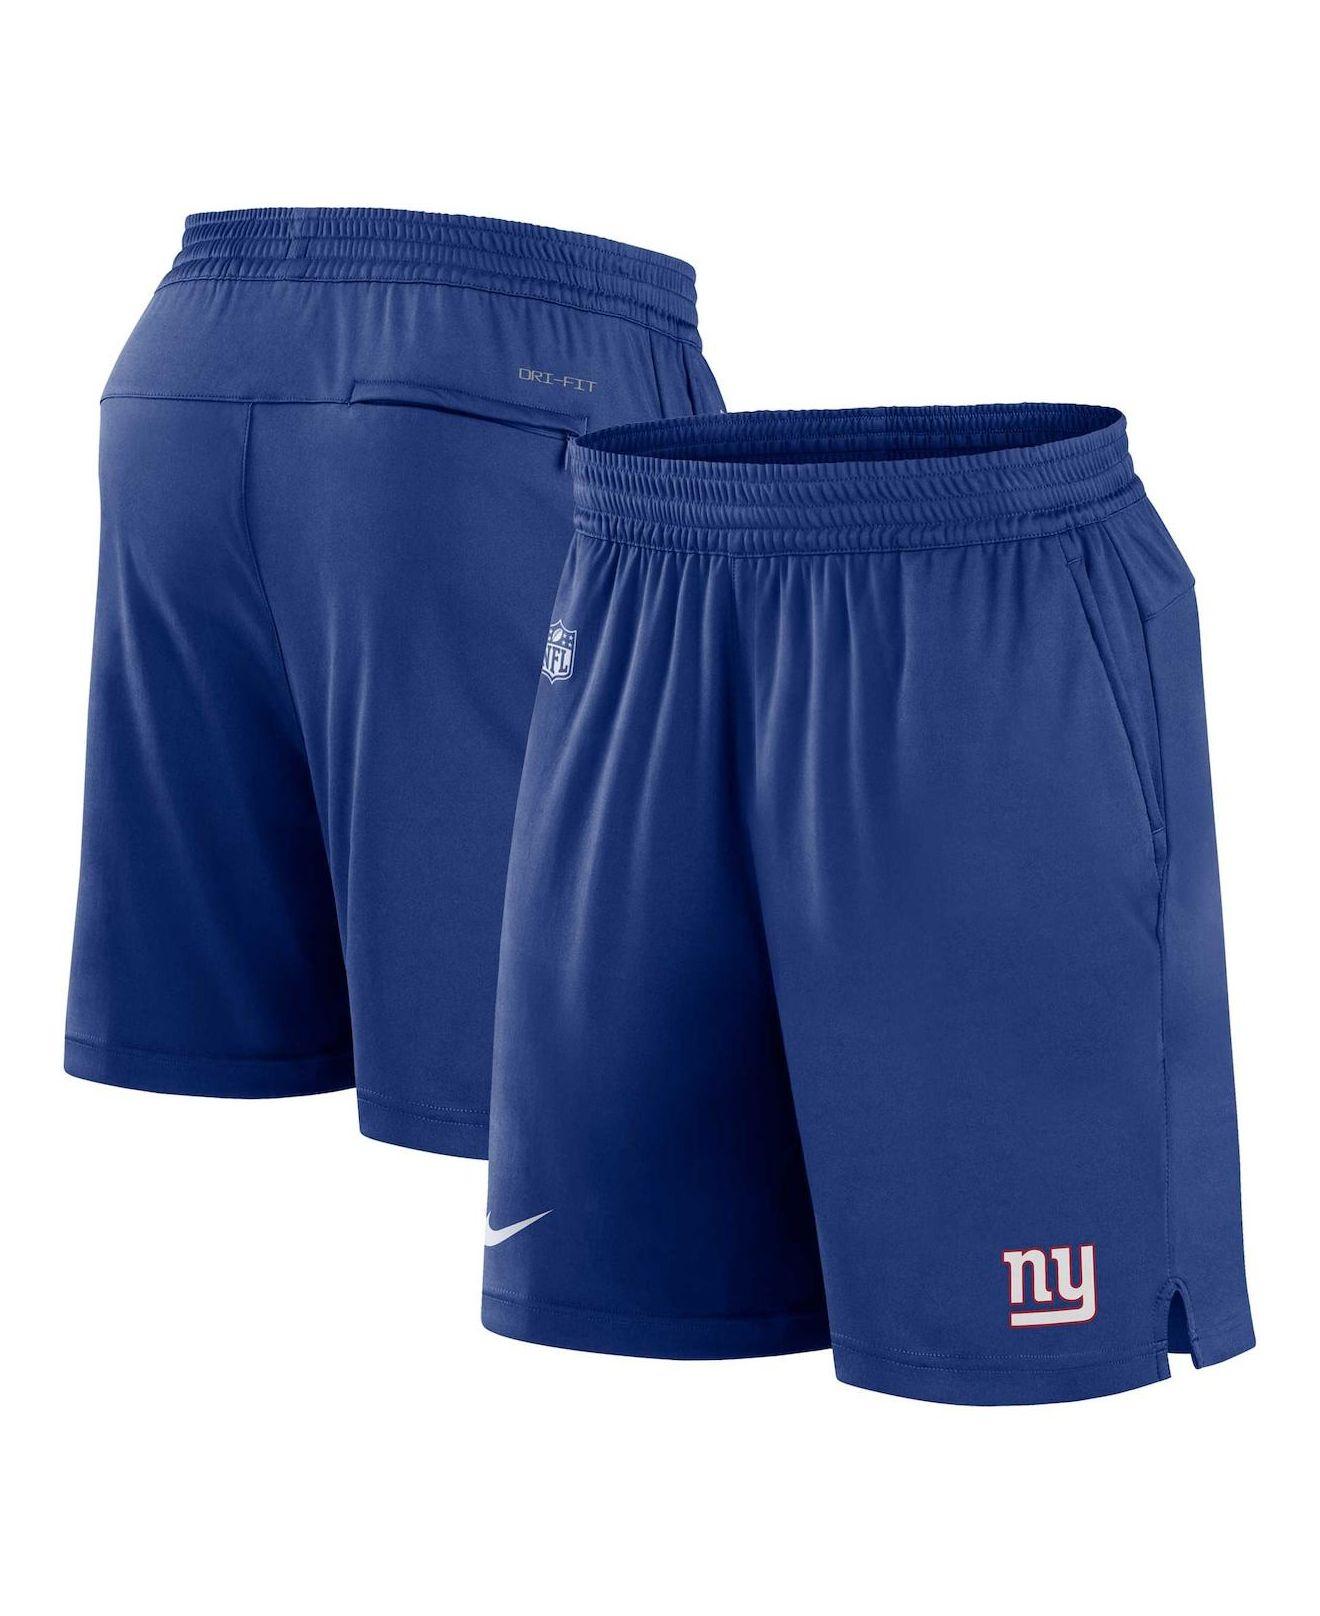 Nike Dri-FIT Primary Lockup (NFL New York Giants) Men's Shorts.